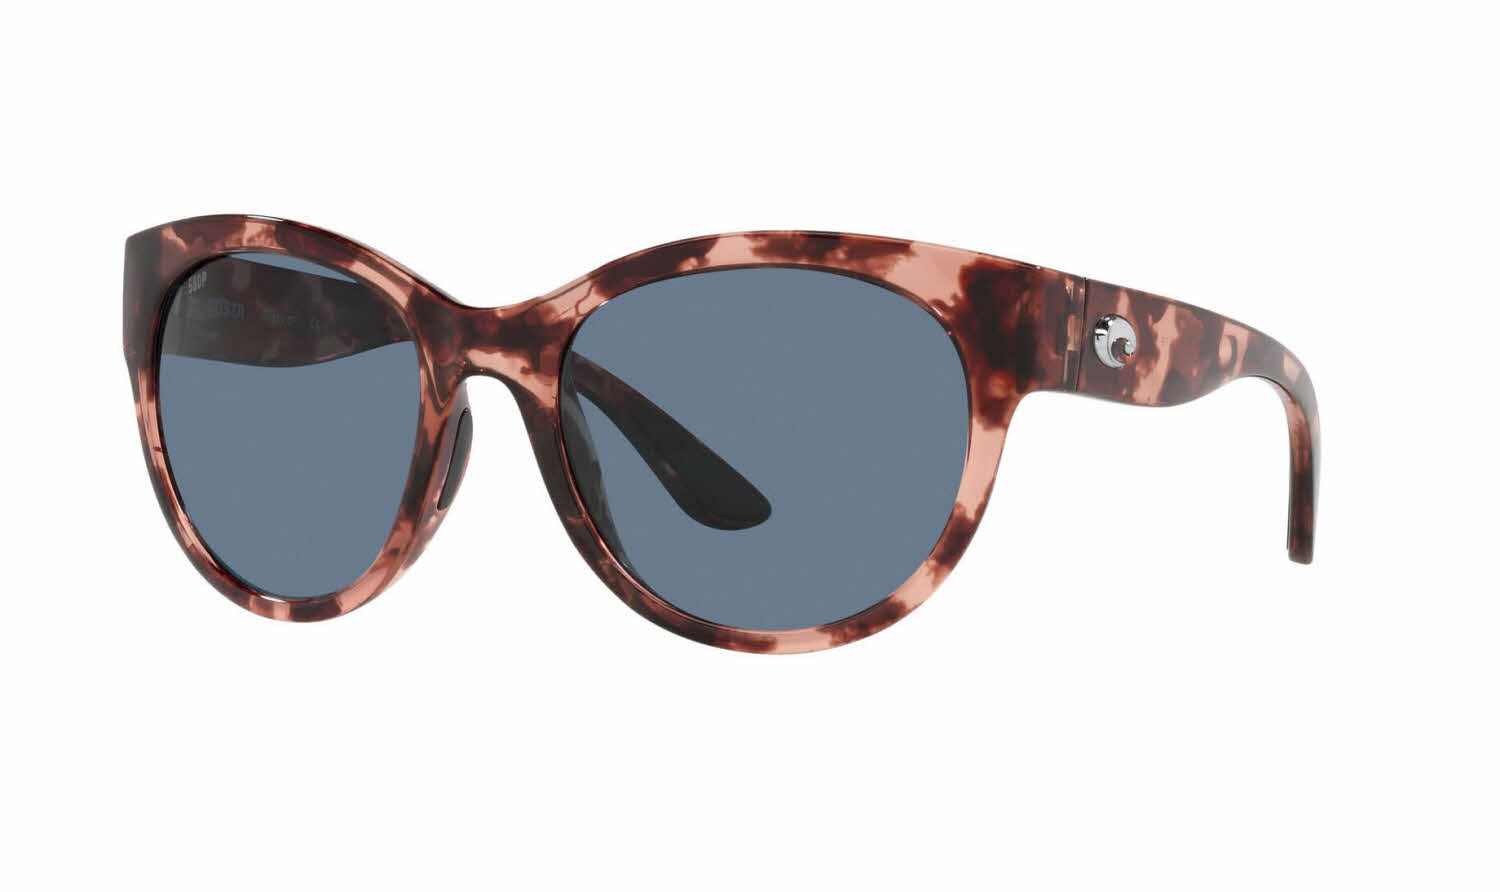 Costa Maya Sunglasses